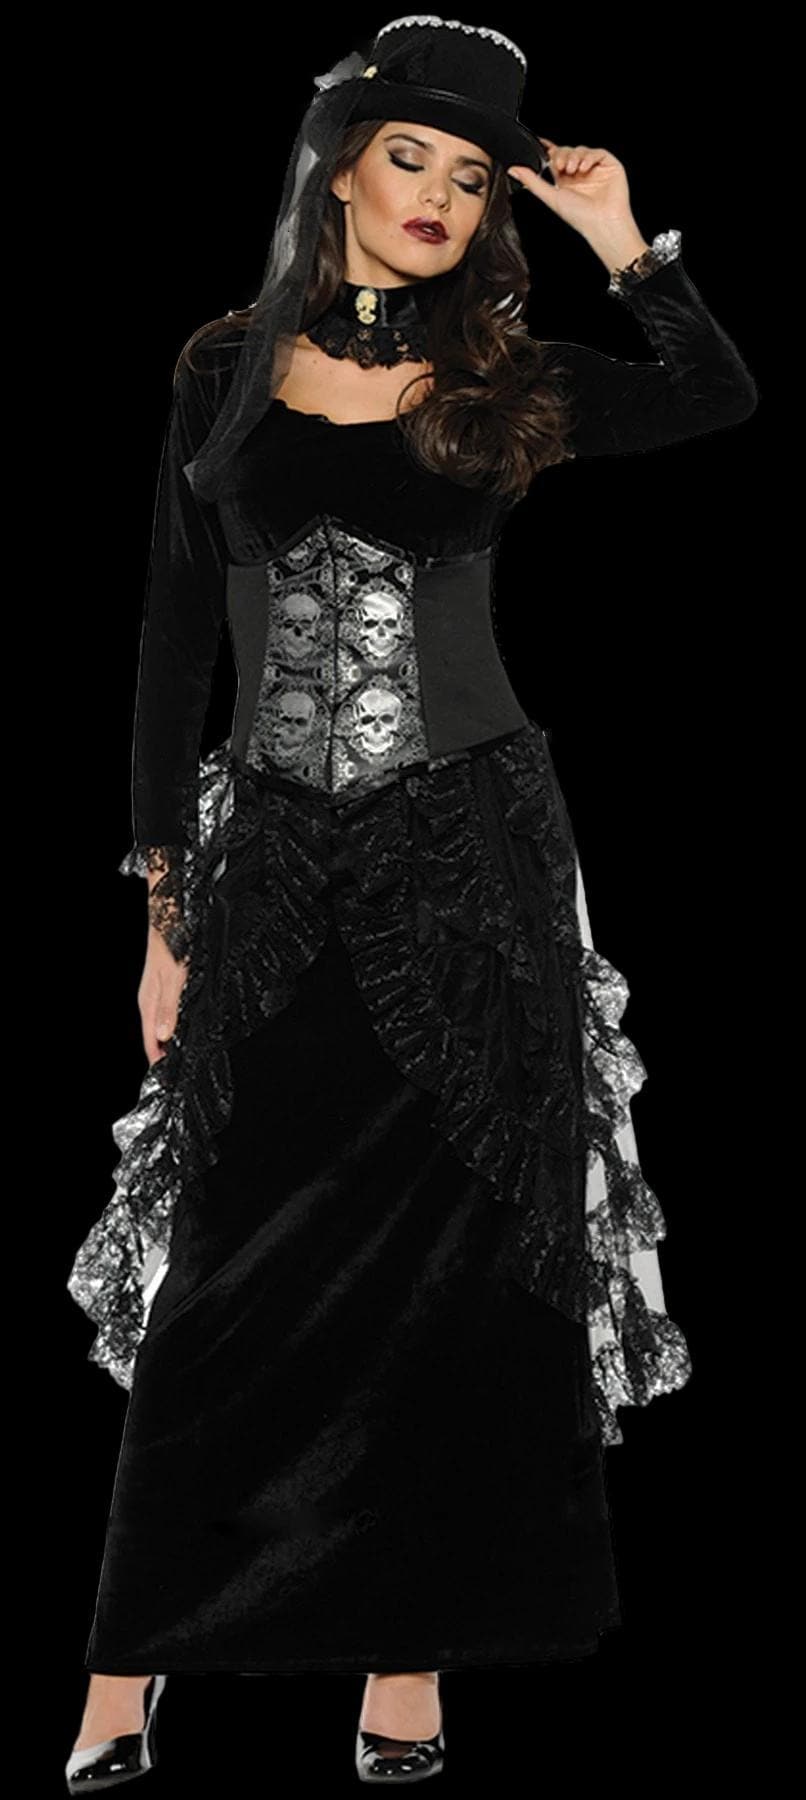 "Dark Mistress" Women's Halloween Costume (Adult Size)